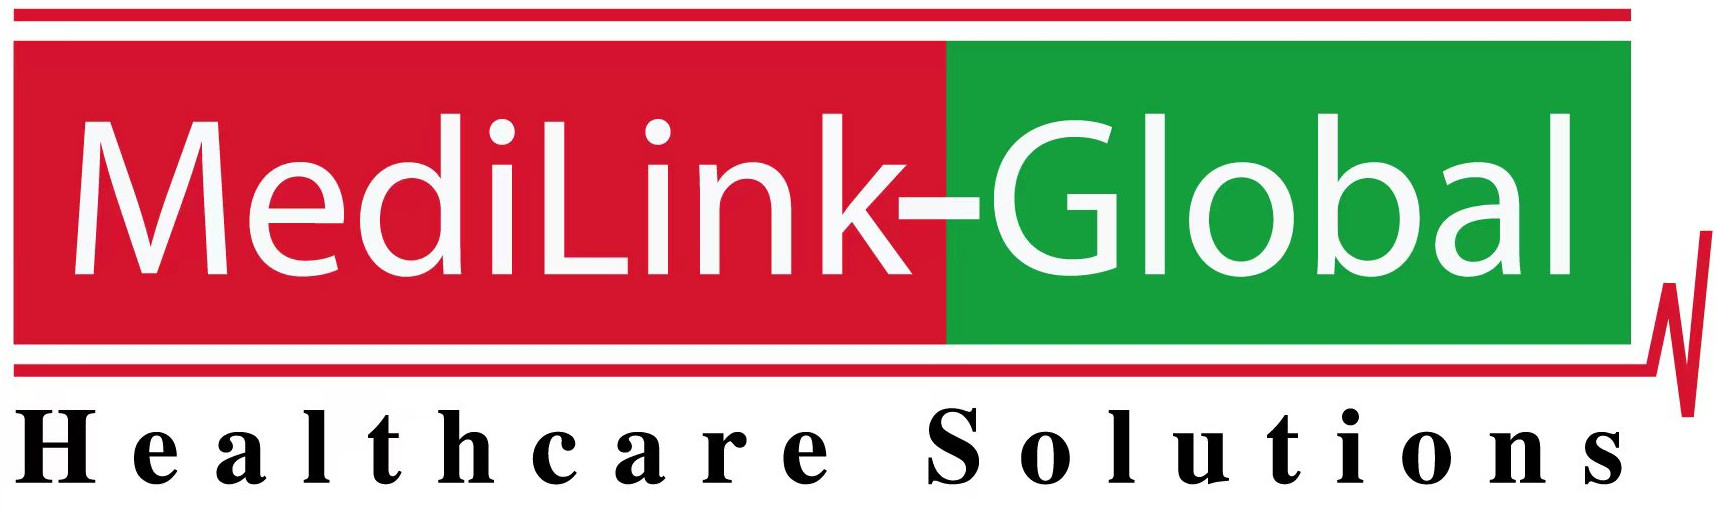 MediLink-Global Co., Ltd. 